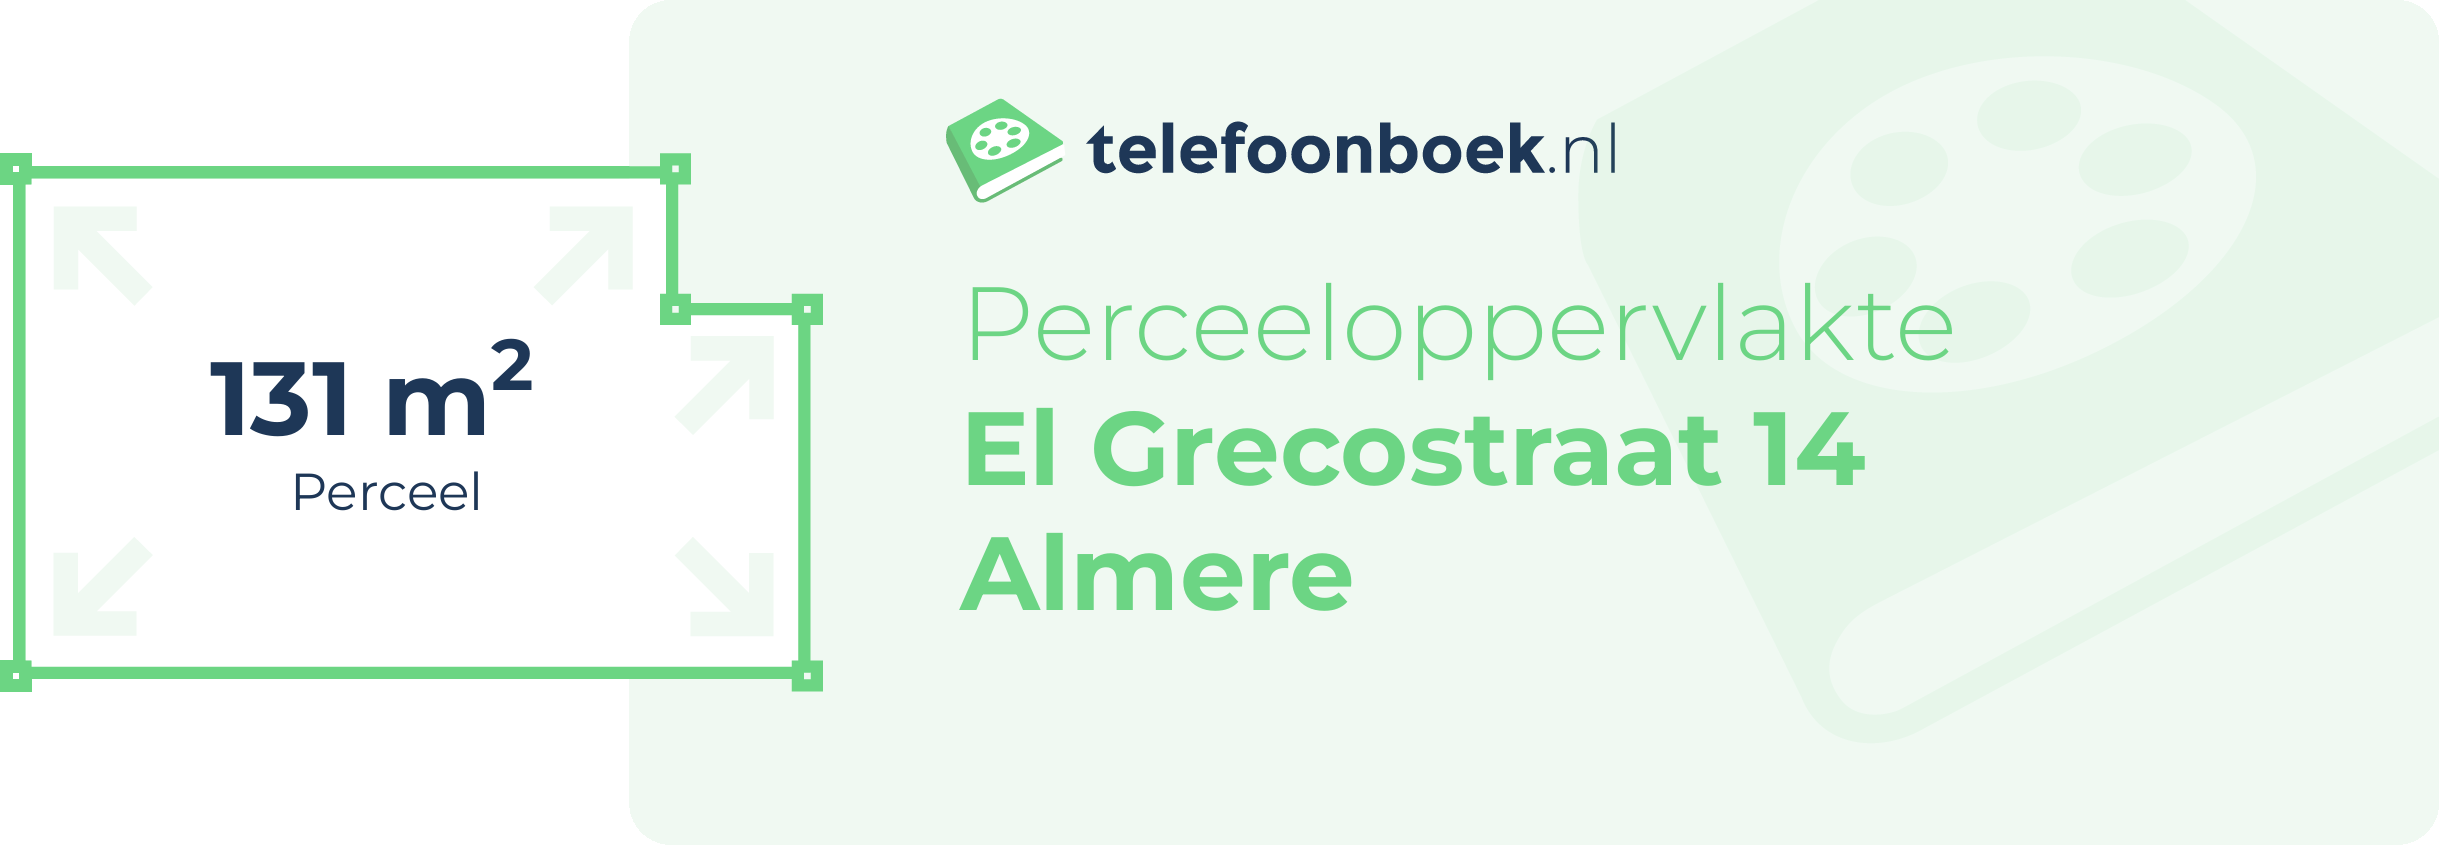 Perceeloppervlakte El Grecostraat 14 Almere